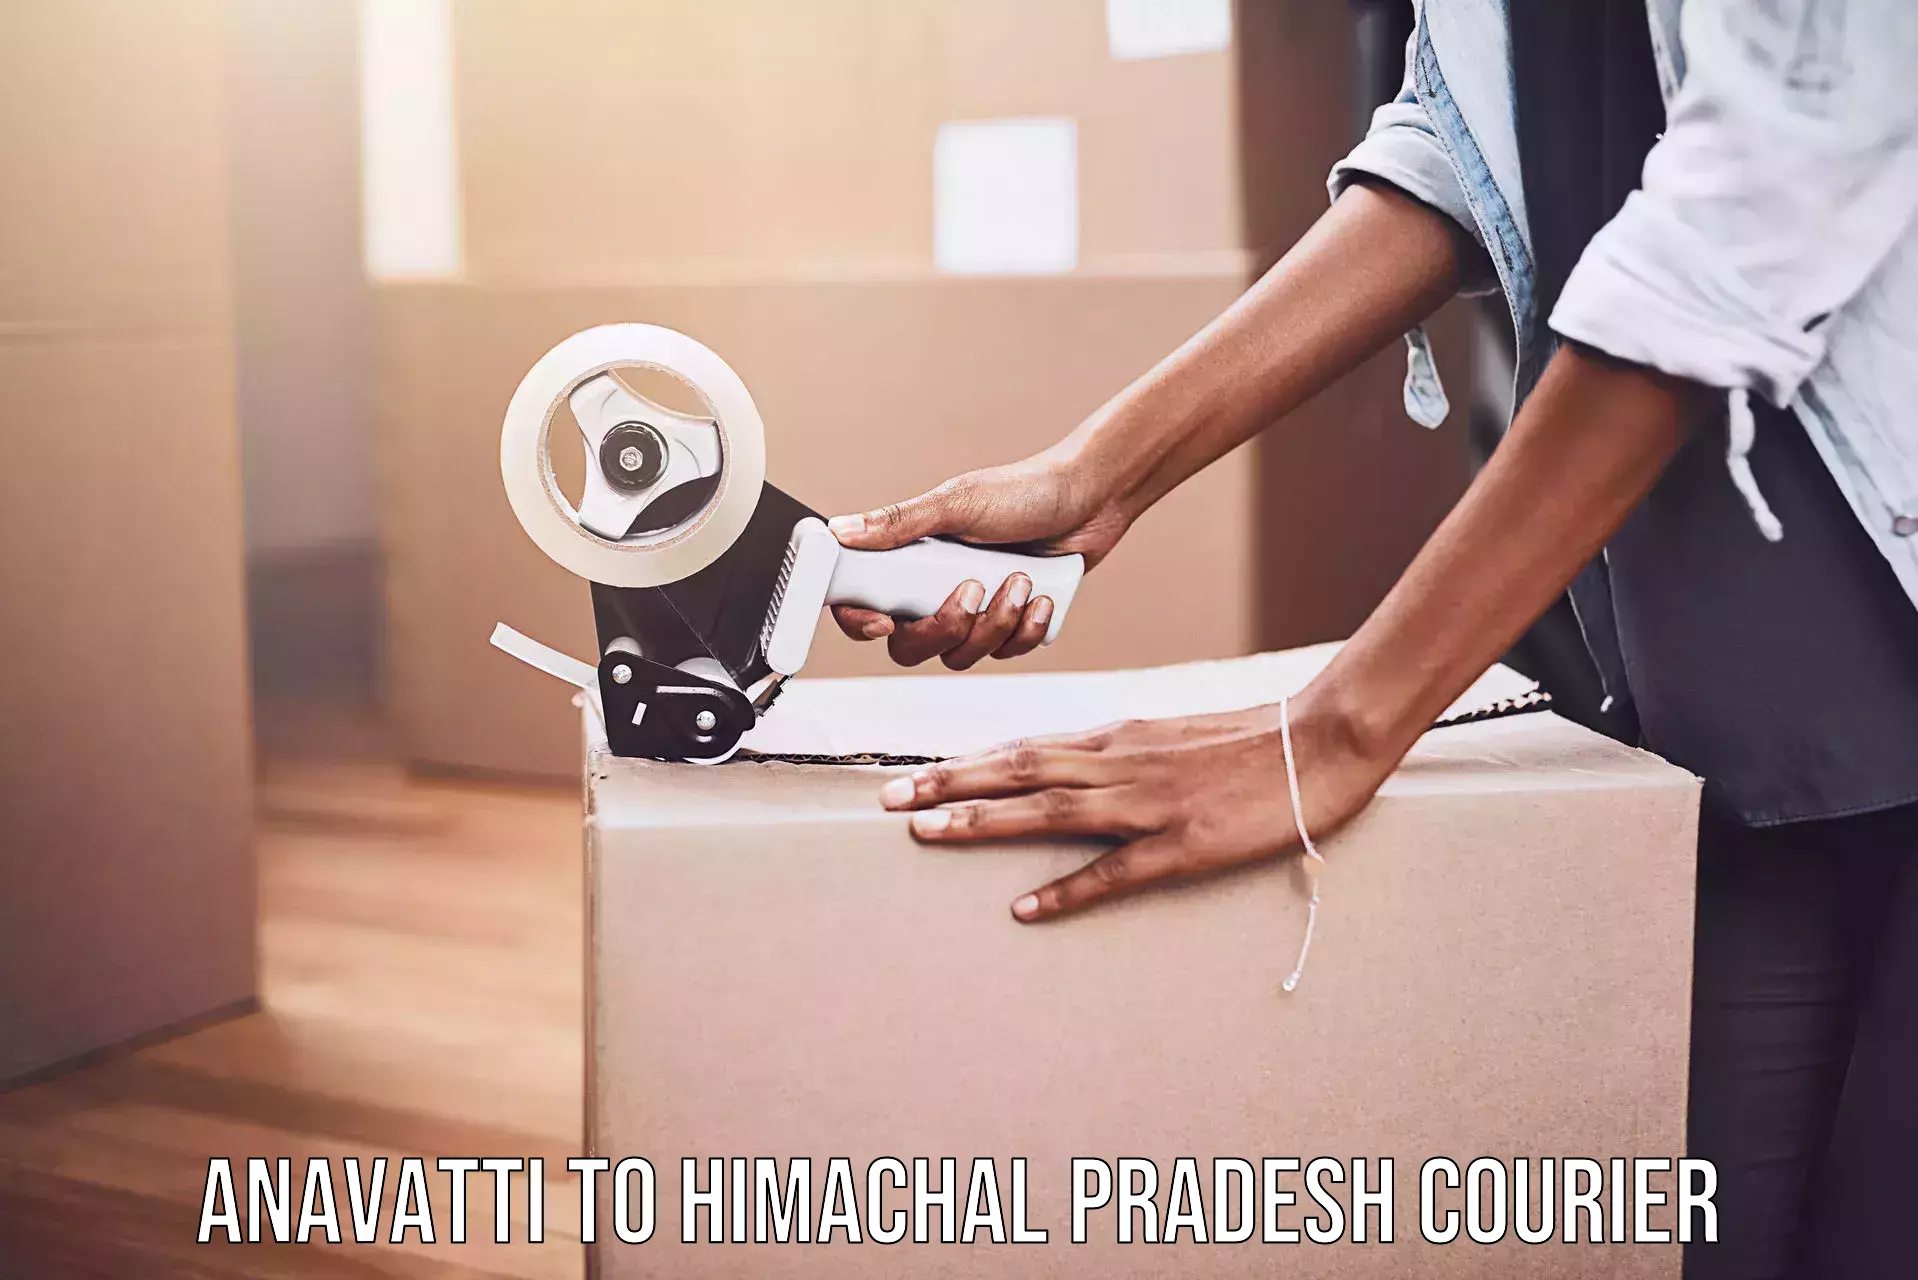 Next-day delivery options Anavatti to Himachal Pradesh